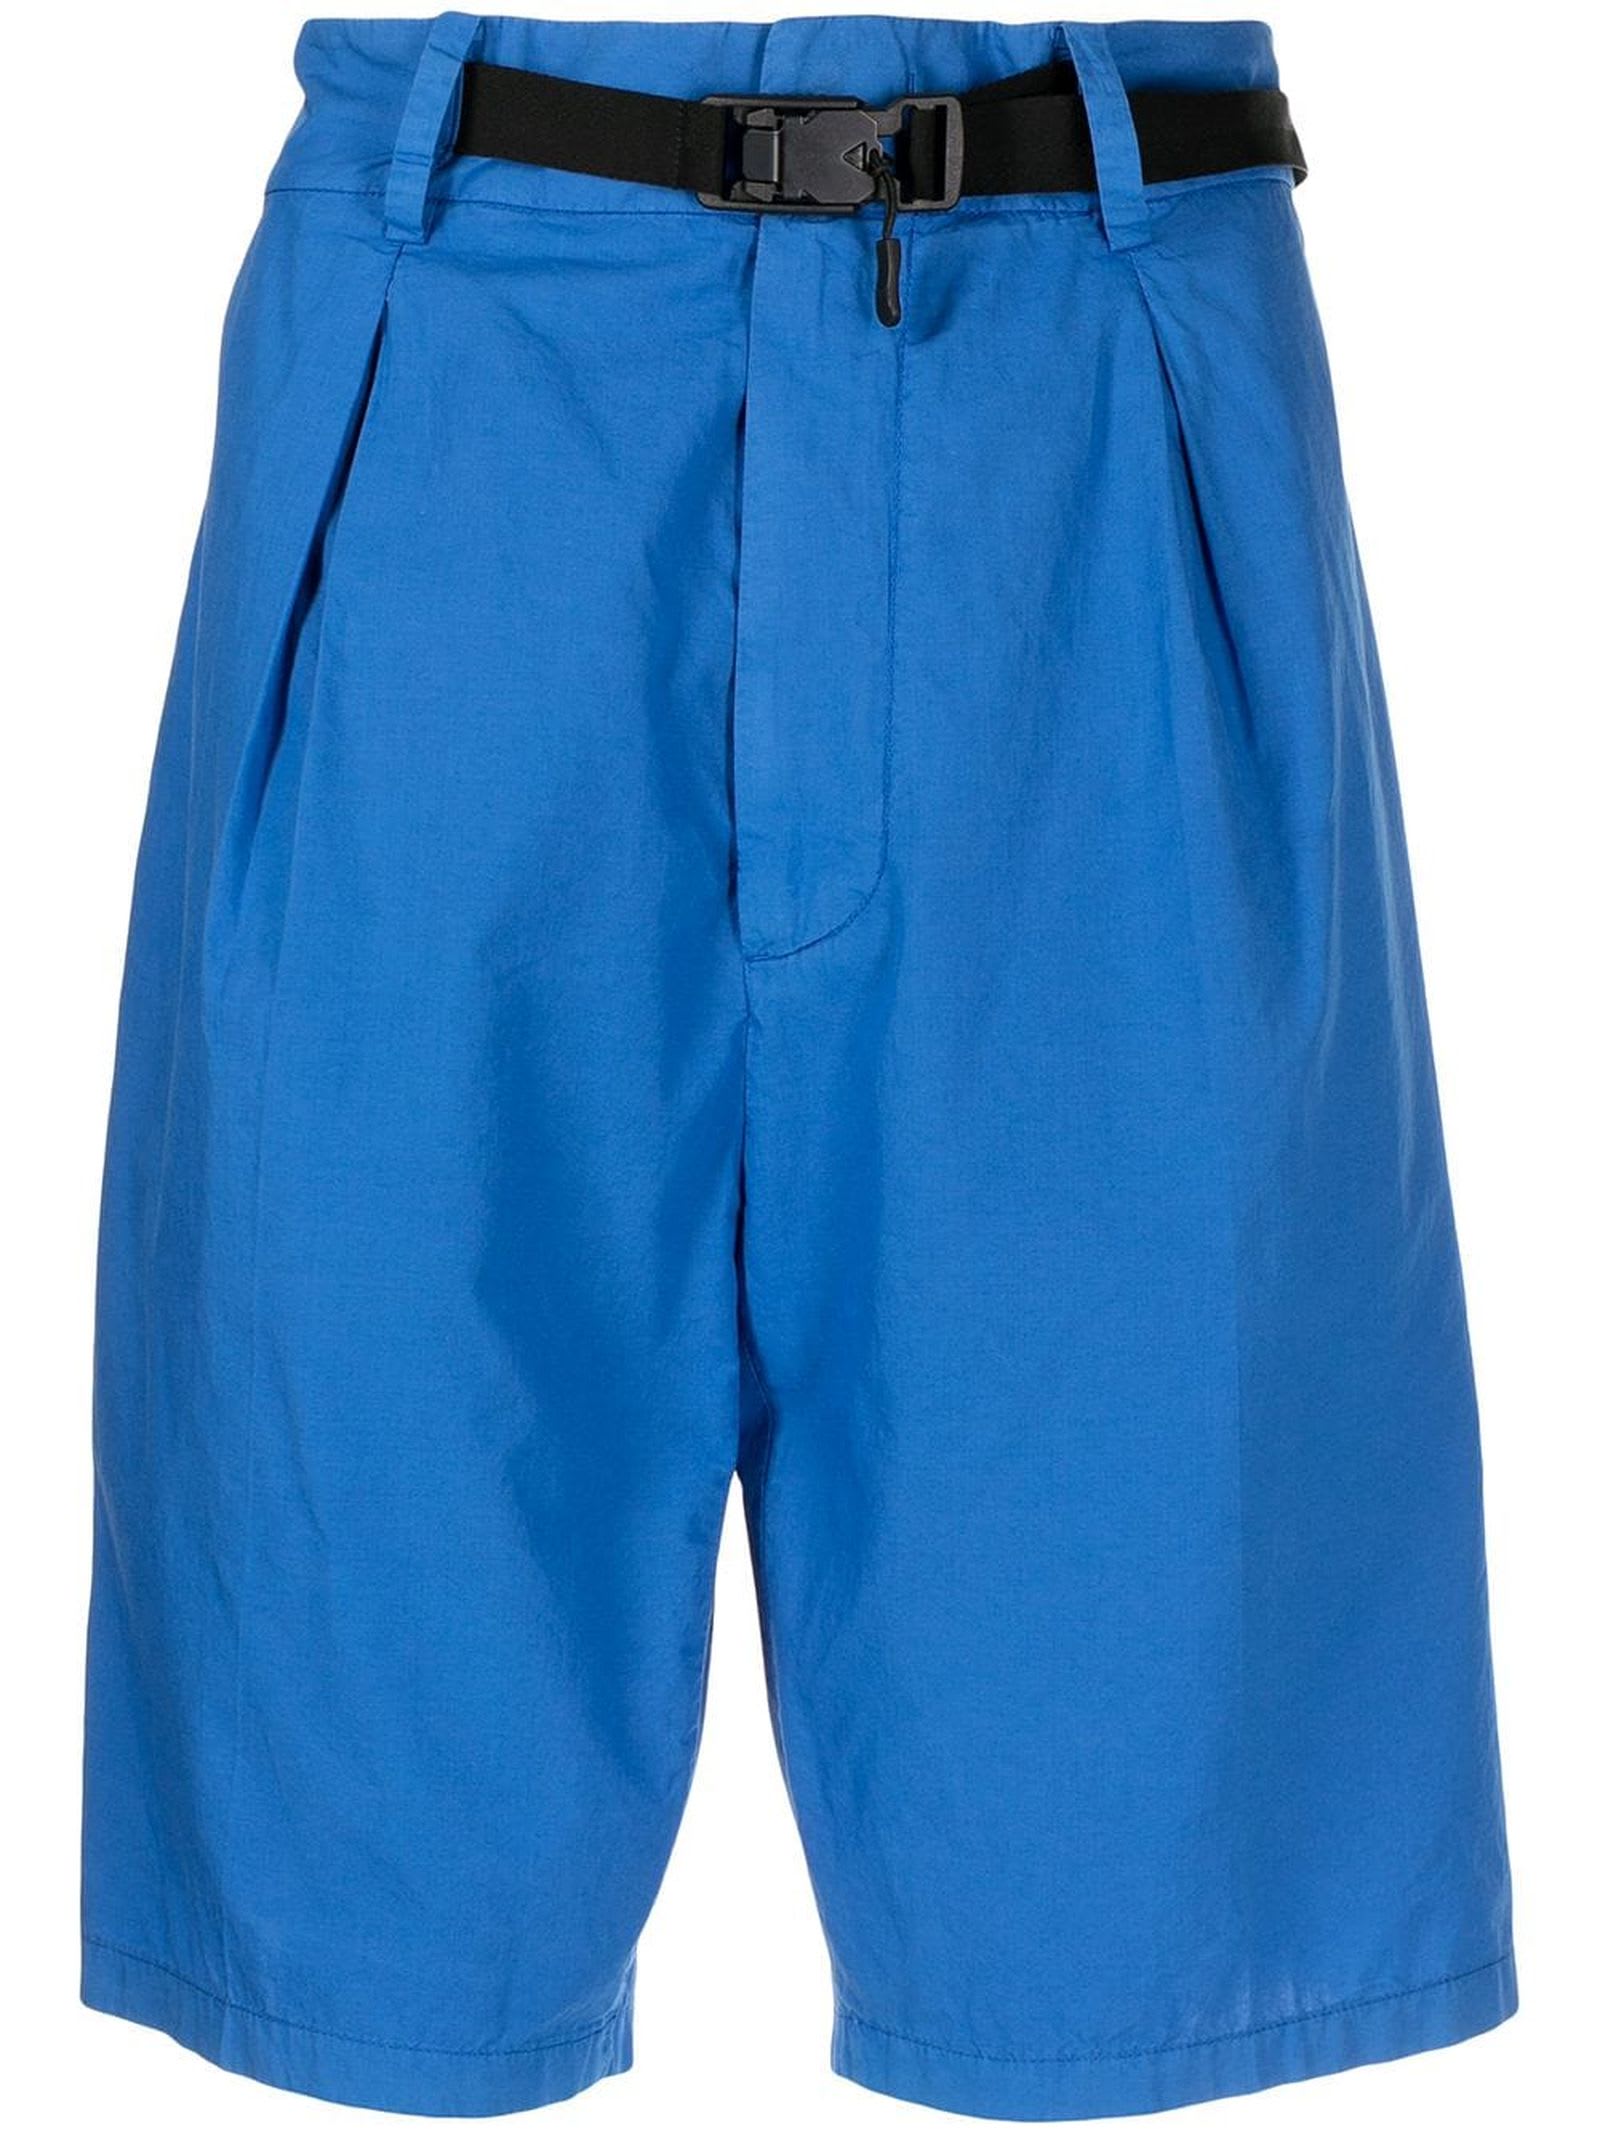 N.21 Blue Cotton Shorts